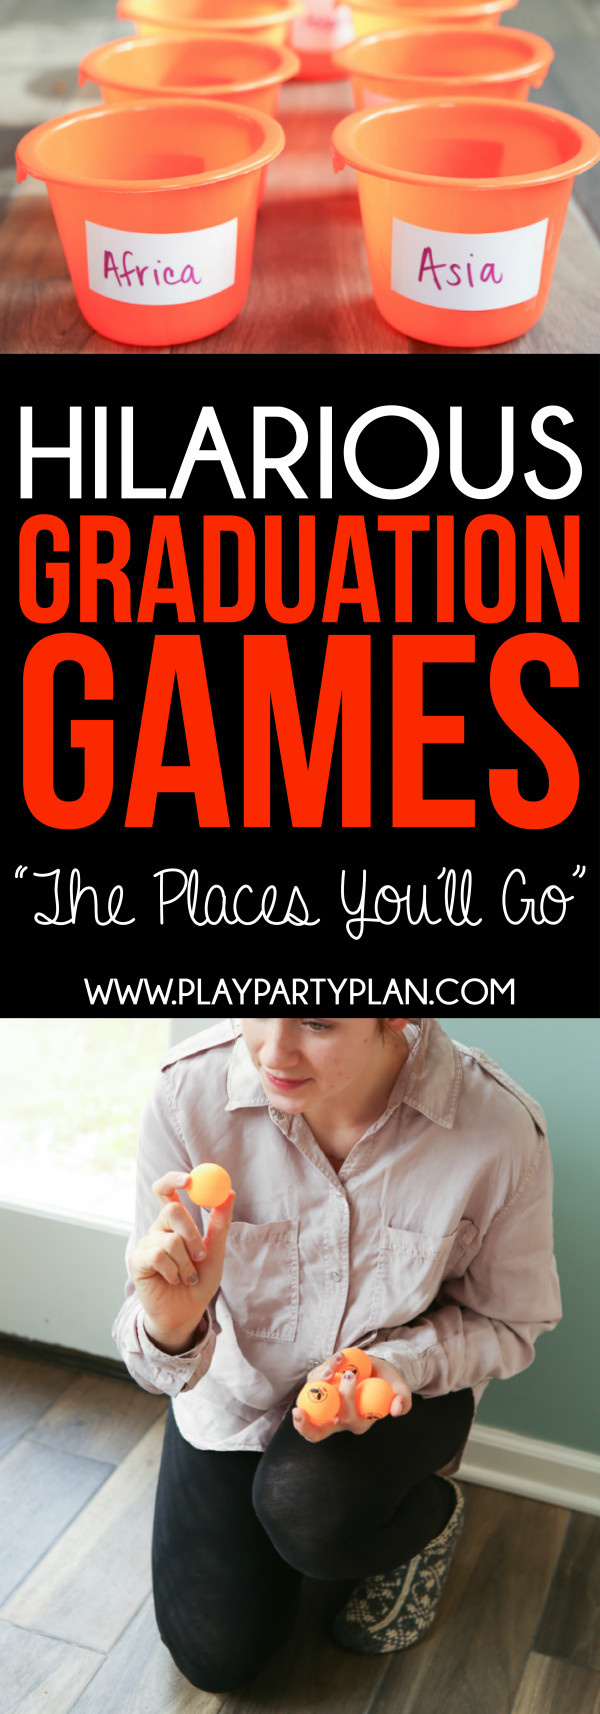 Outdoor Graduation Party Game Ideas
 Hilarious Graduation Party Games